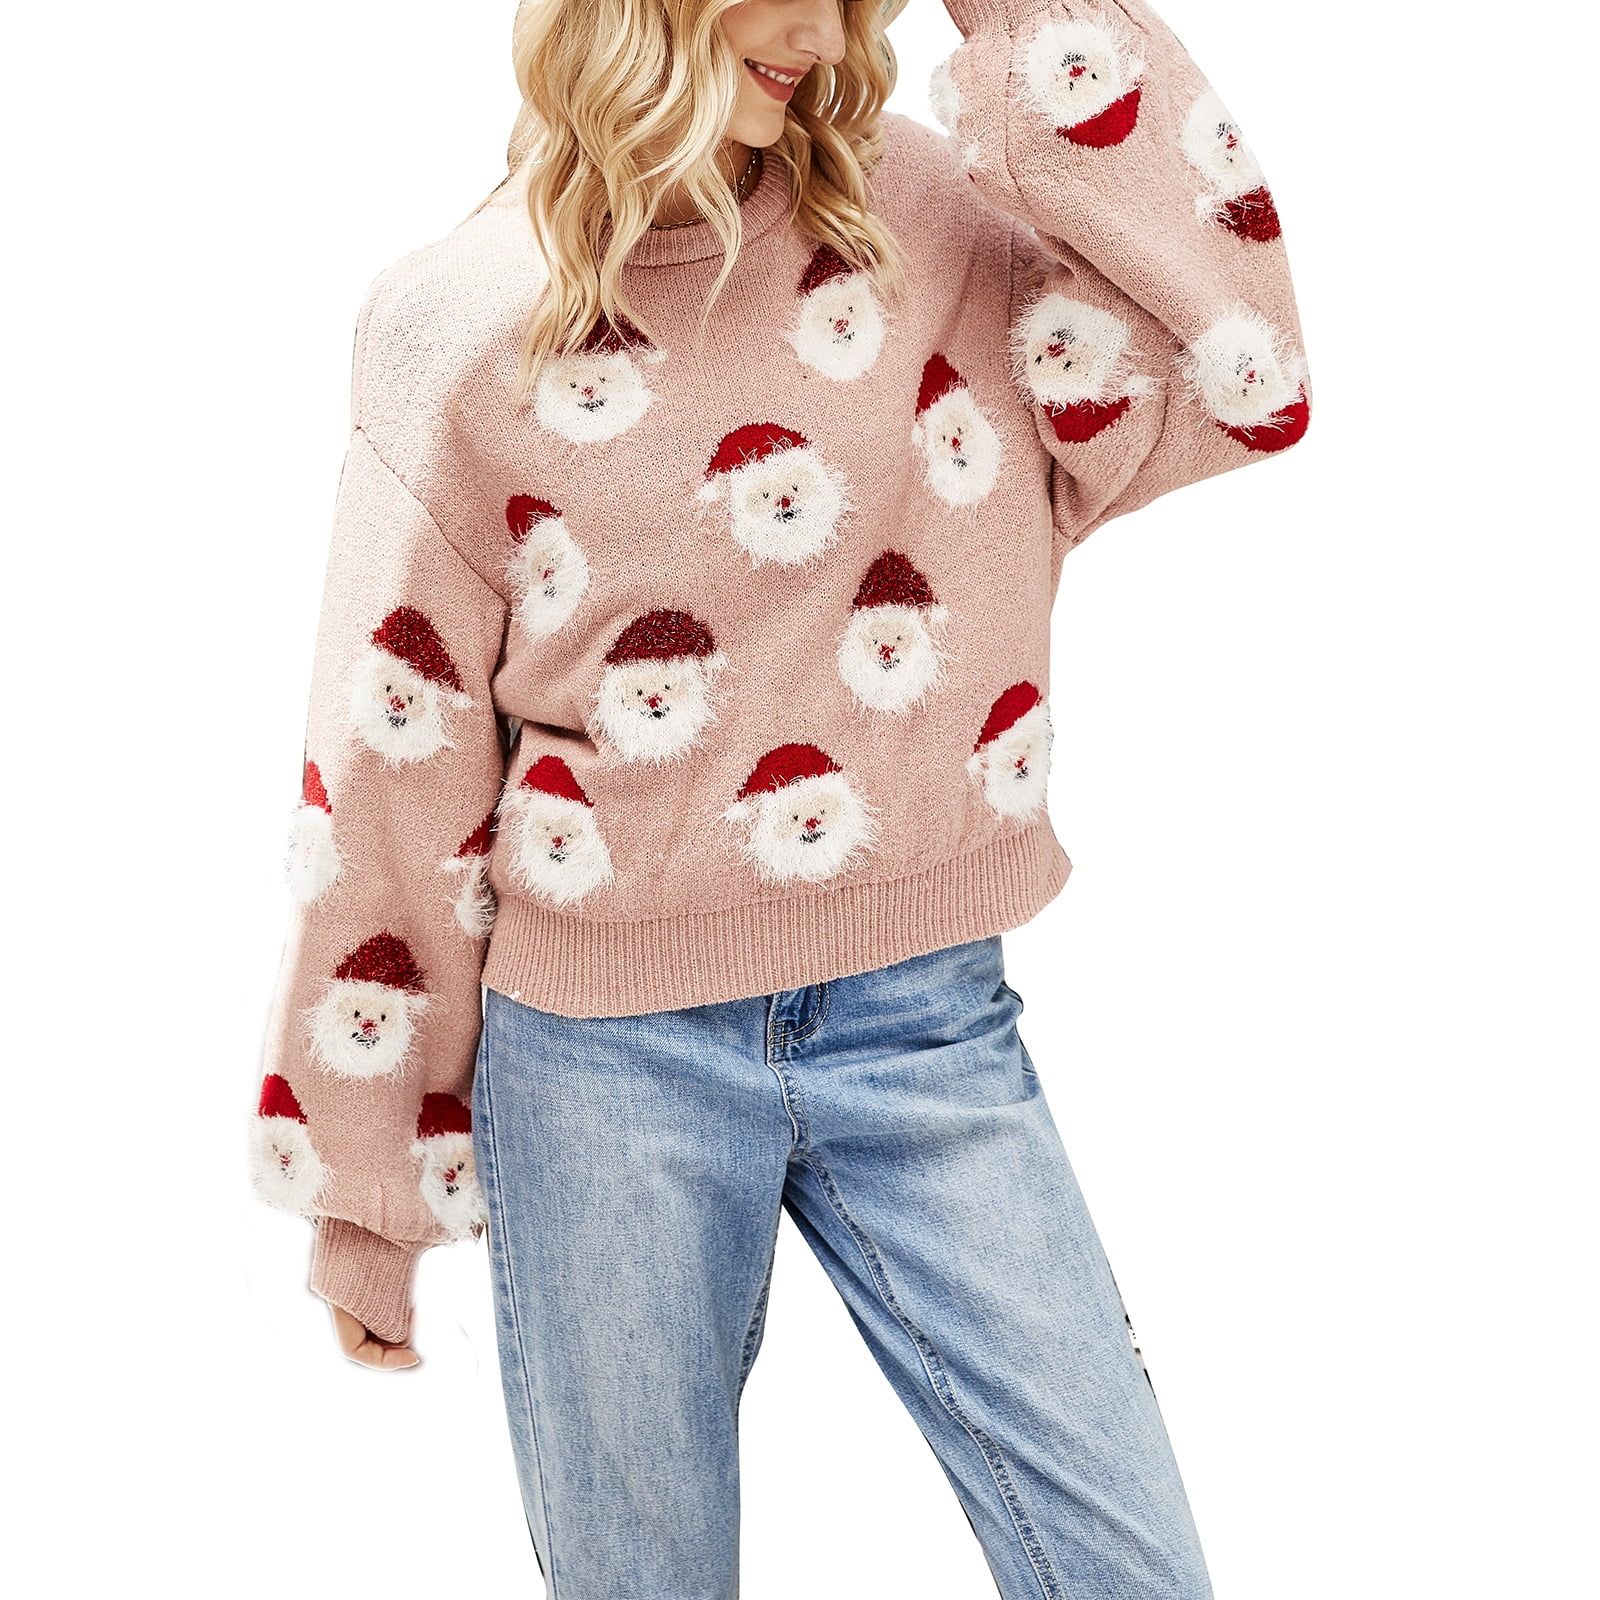 Women?s Christmas Sweaters, Cute Santa Claus Print Long Sleeve Crewneck Knitted Loose Pullovers | Walmart (US)